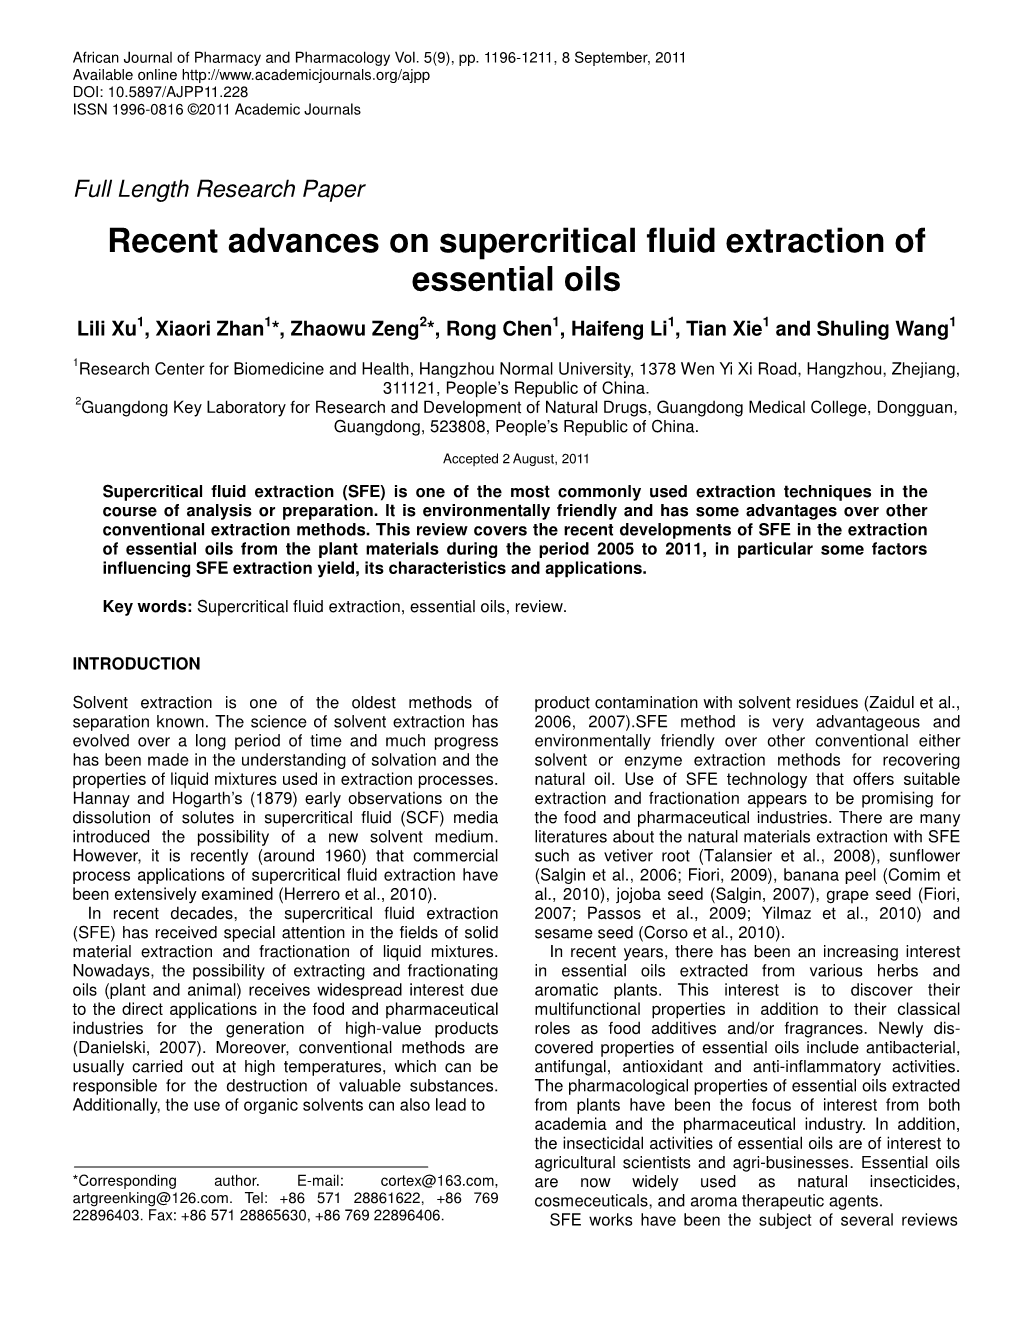 Recent Advances on Supercritical Fluid Extraction of Essential Oils